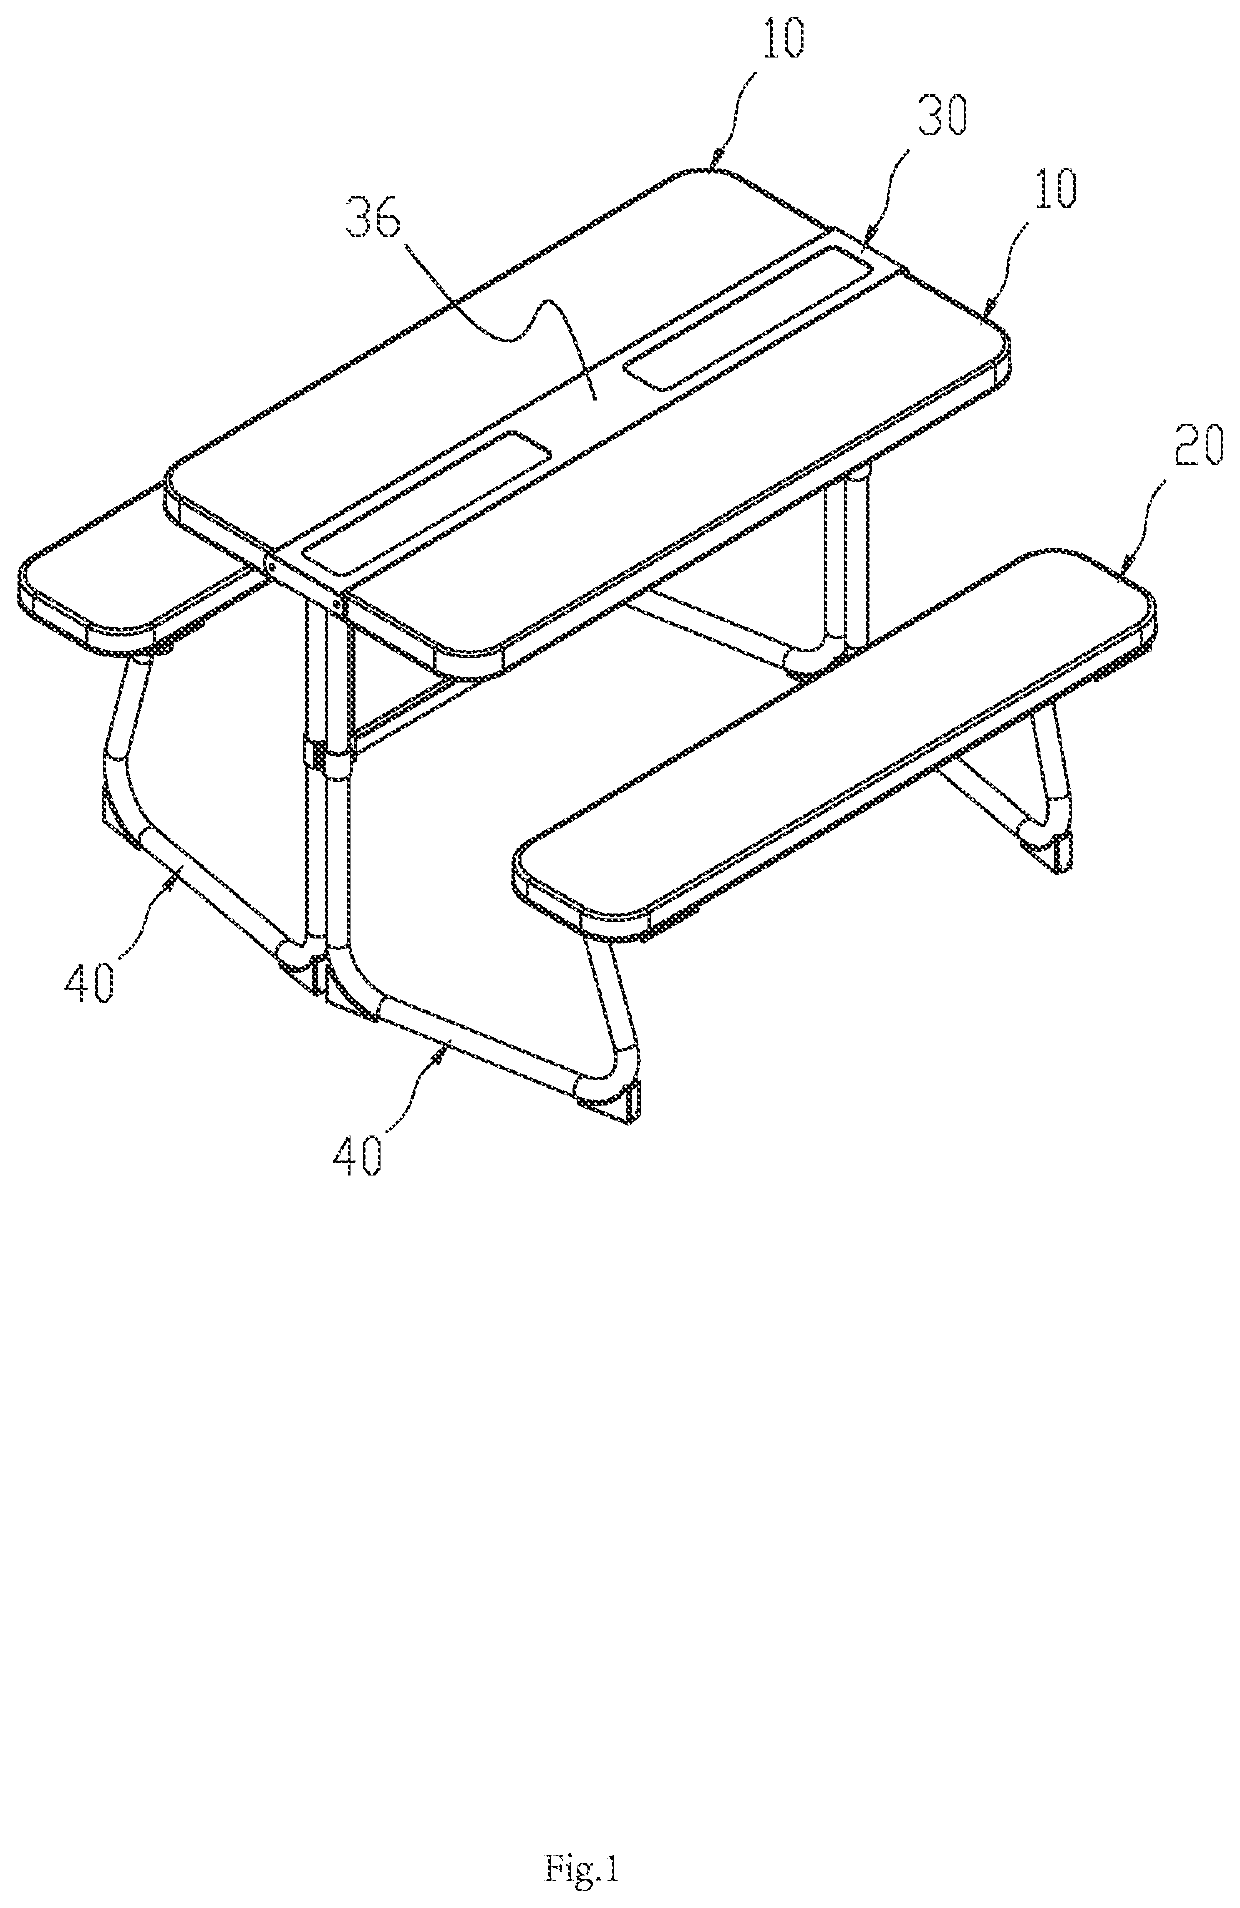 Folding stool or folding table